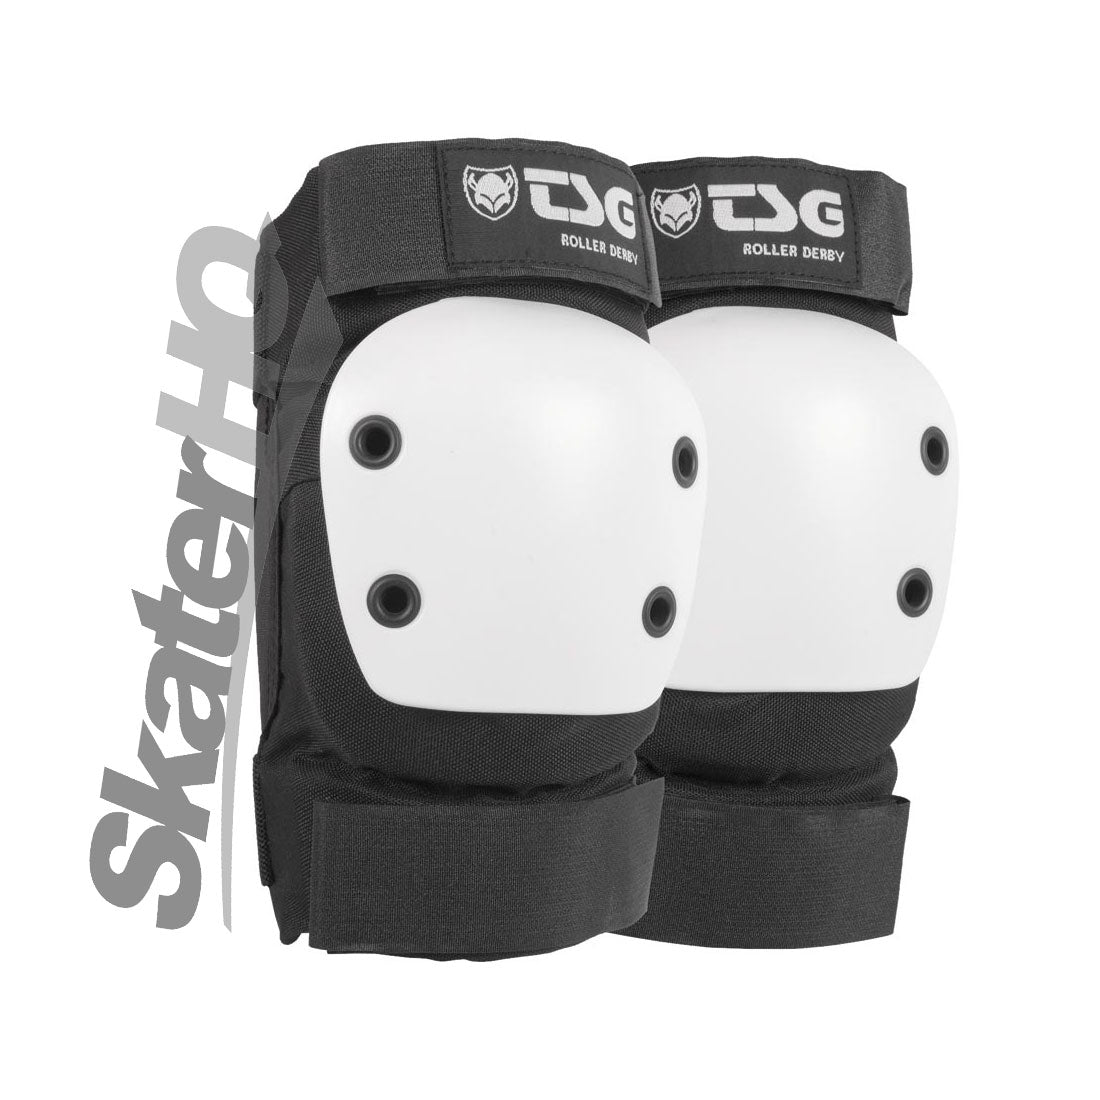 TSG Rollerderby Elbow 2.0 - Medium Protective Gear